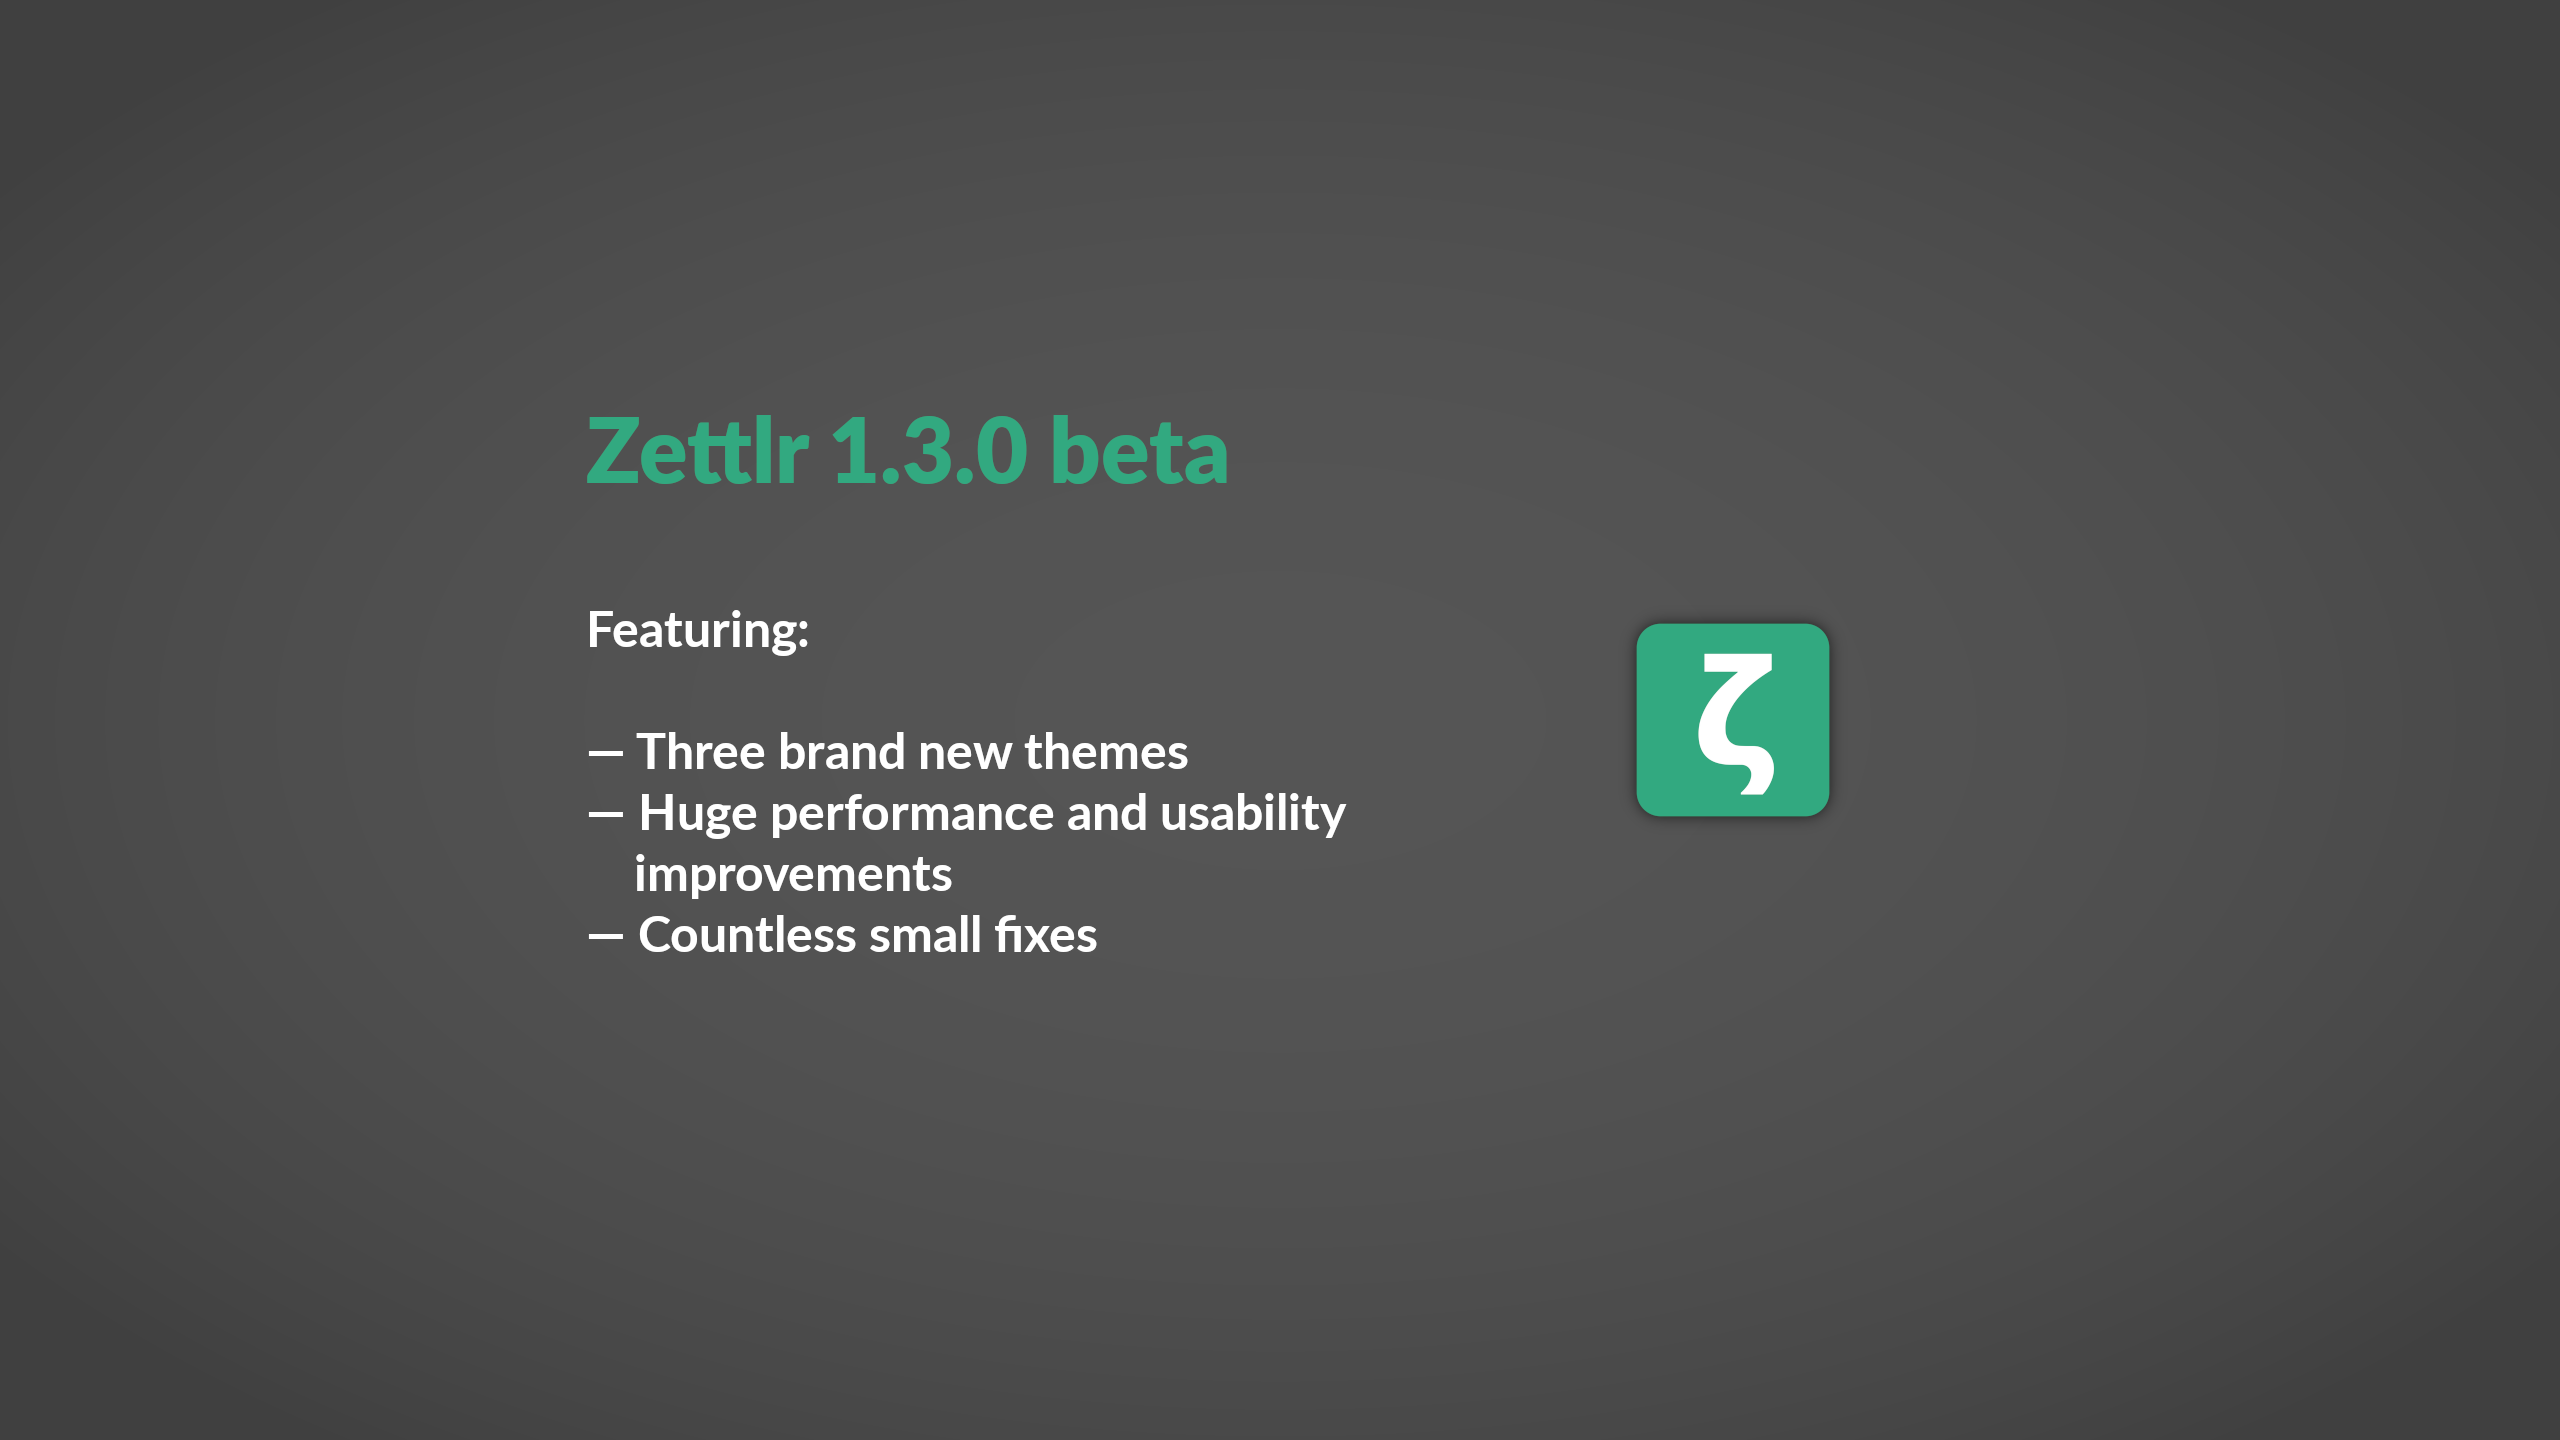 Beta Phase for Zettlr 1.3 begins